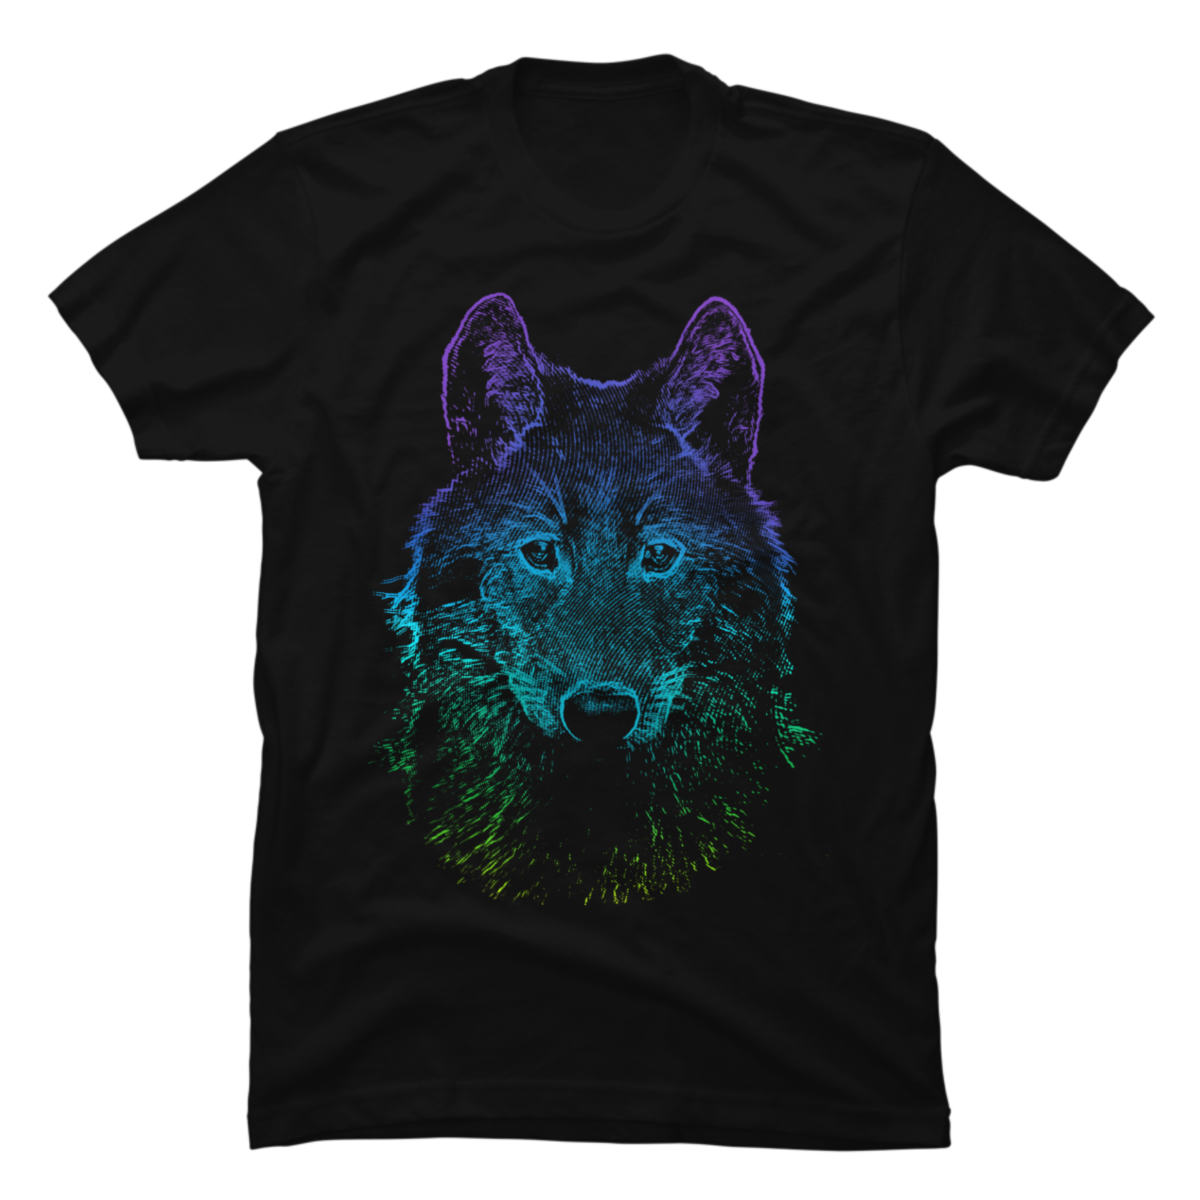 Wolf rainbow drawing,present tshirt - Buy t-shirt designs